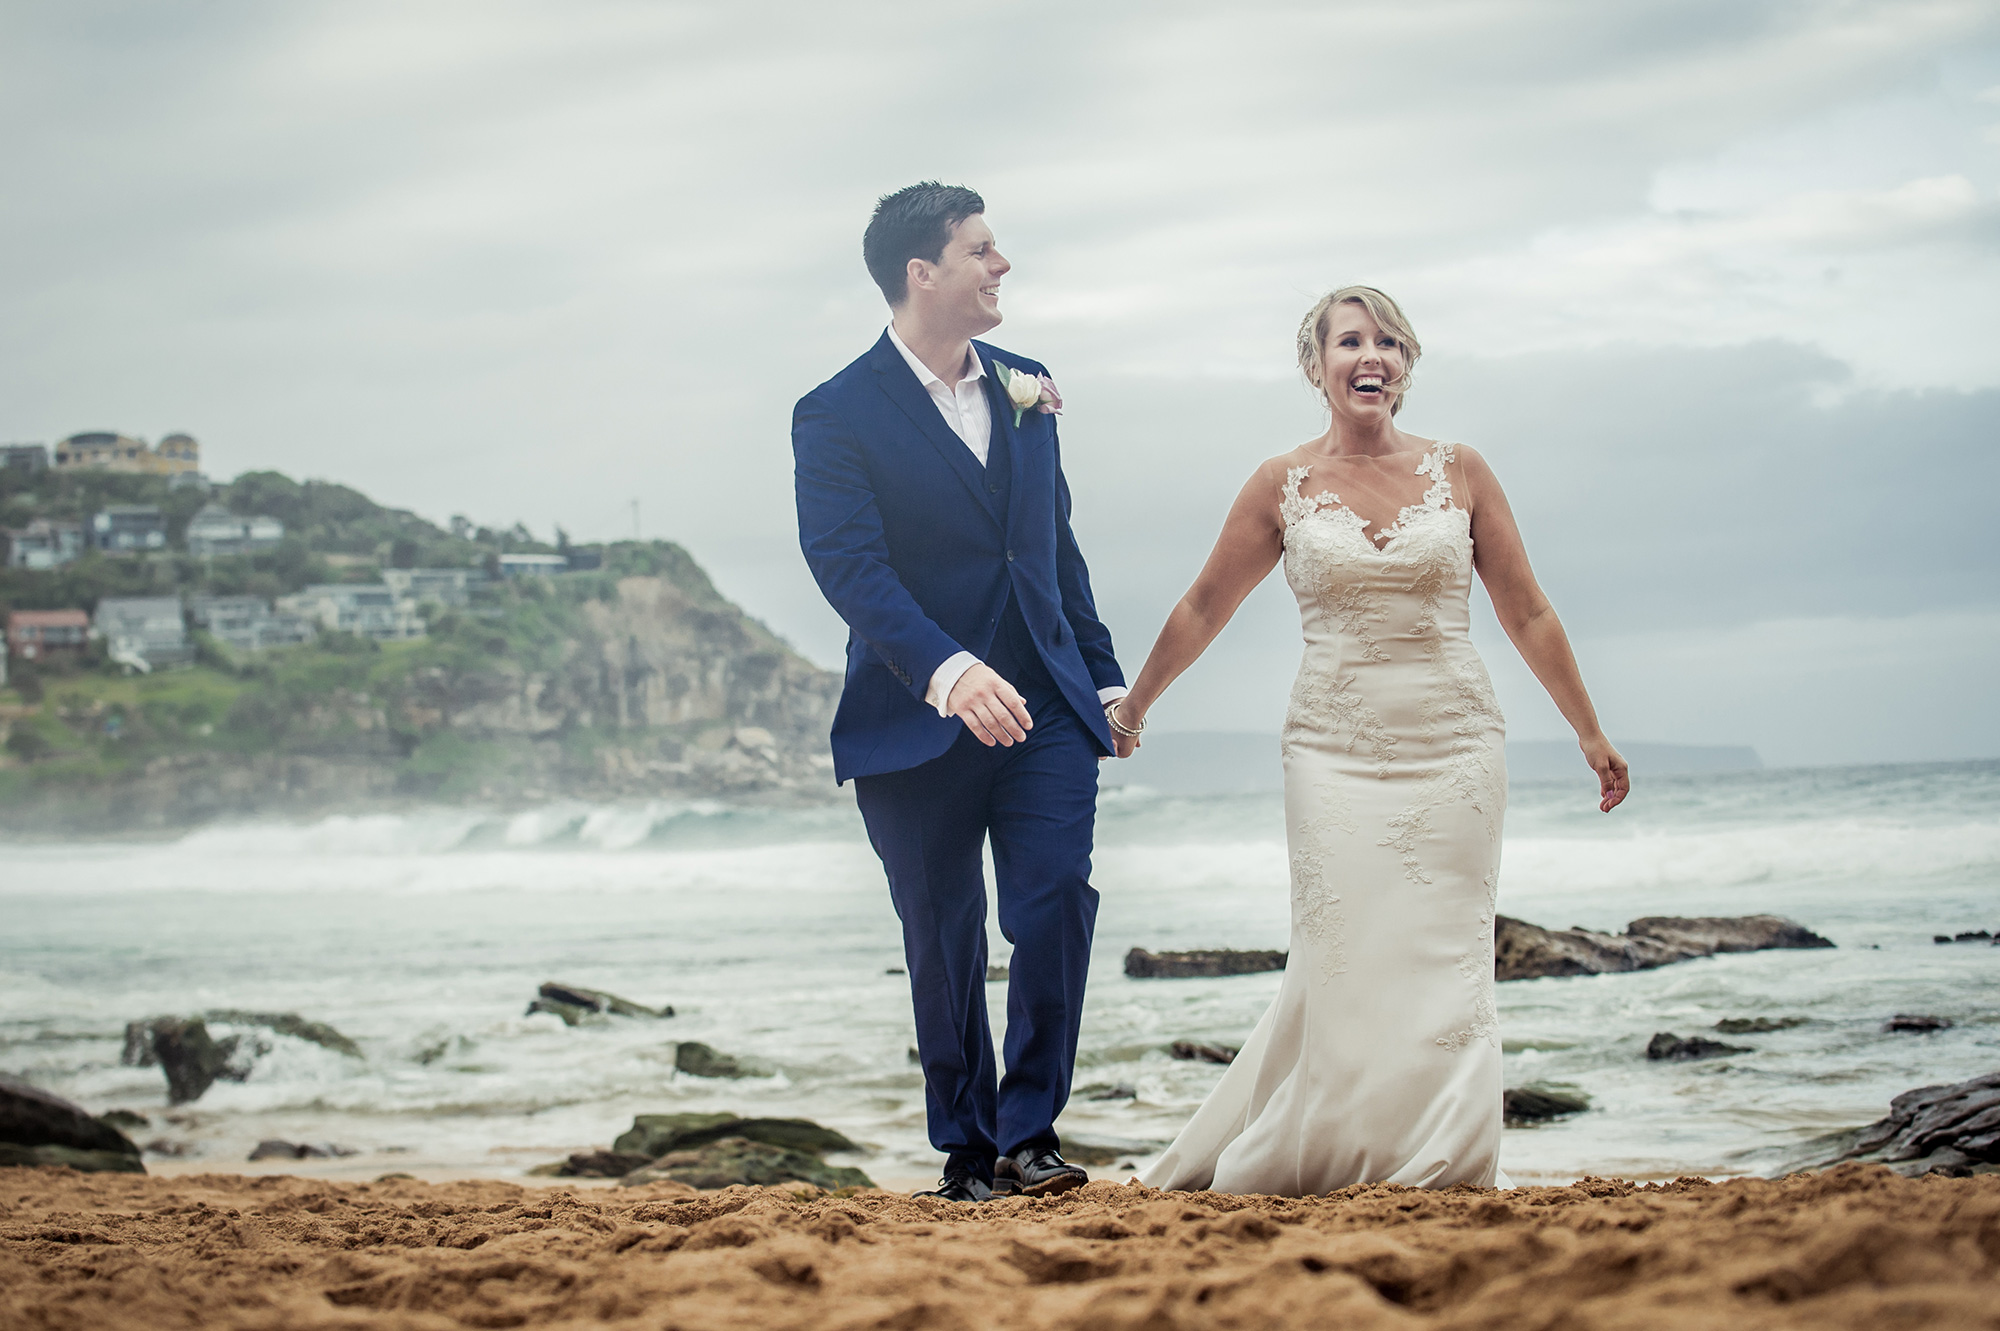 Lorna_Ben_Formal-Beach-Wedding_032